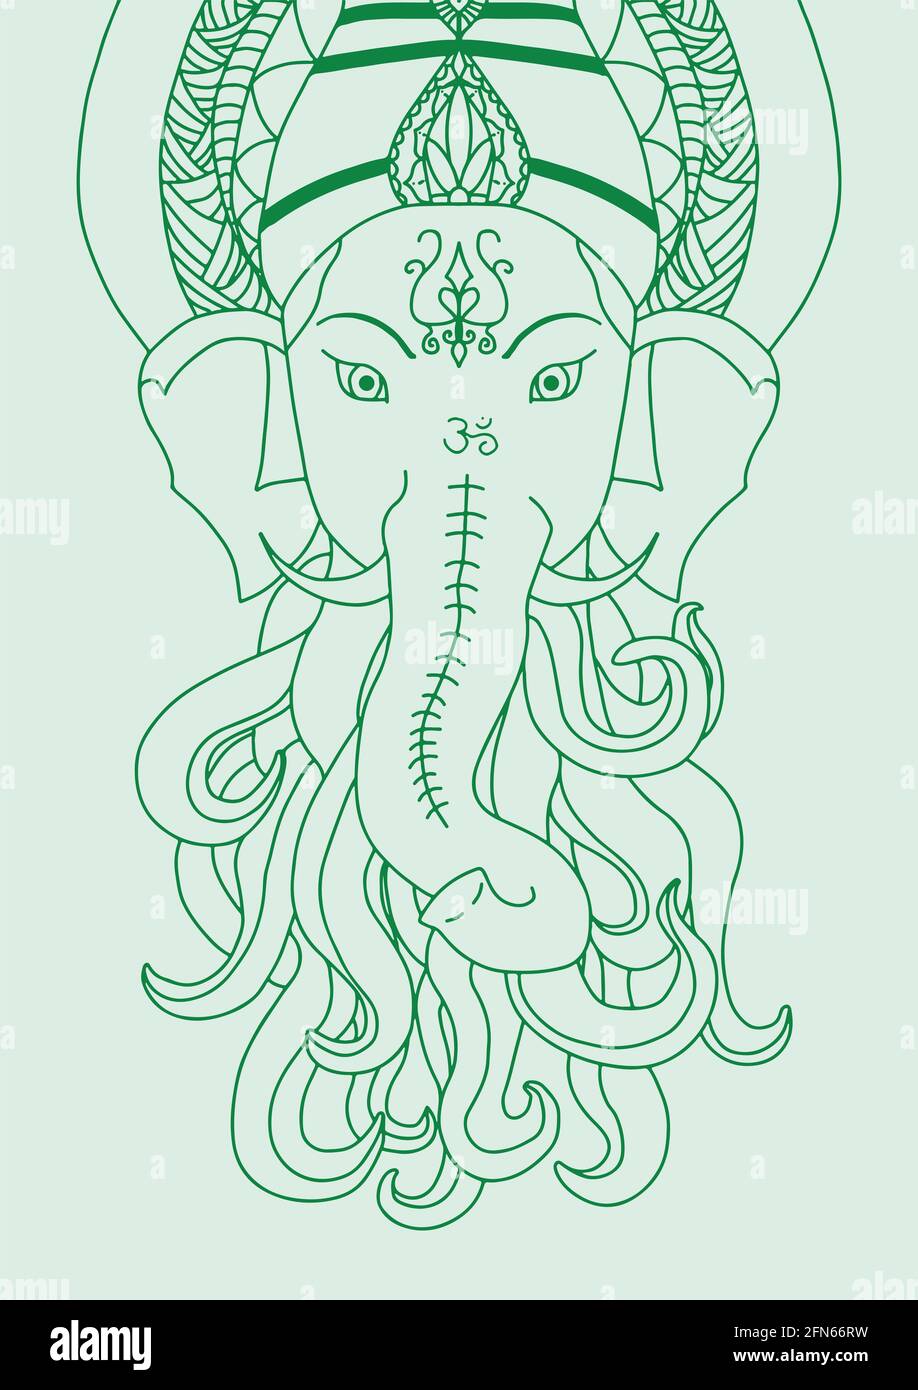 God Ganesha Drawing by MLSPcArt on Dribbble